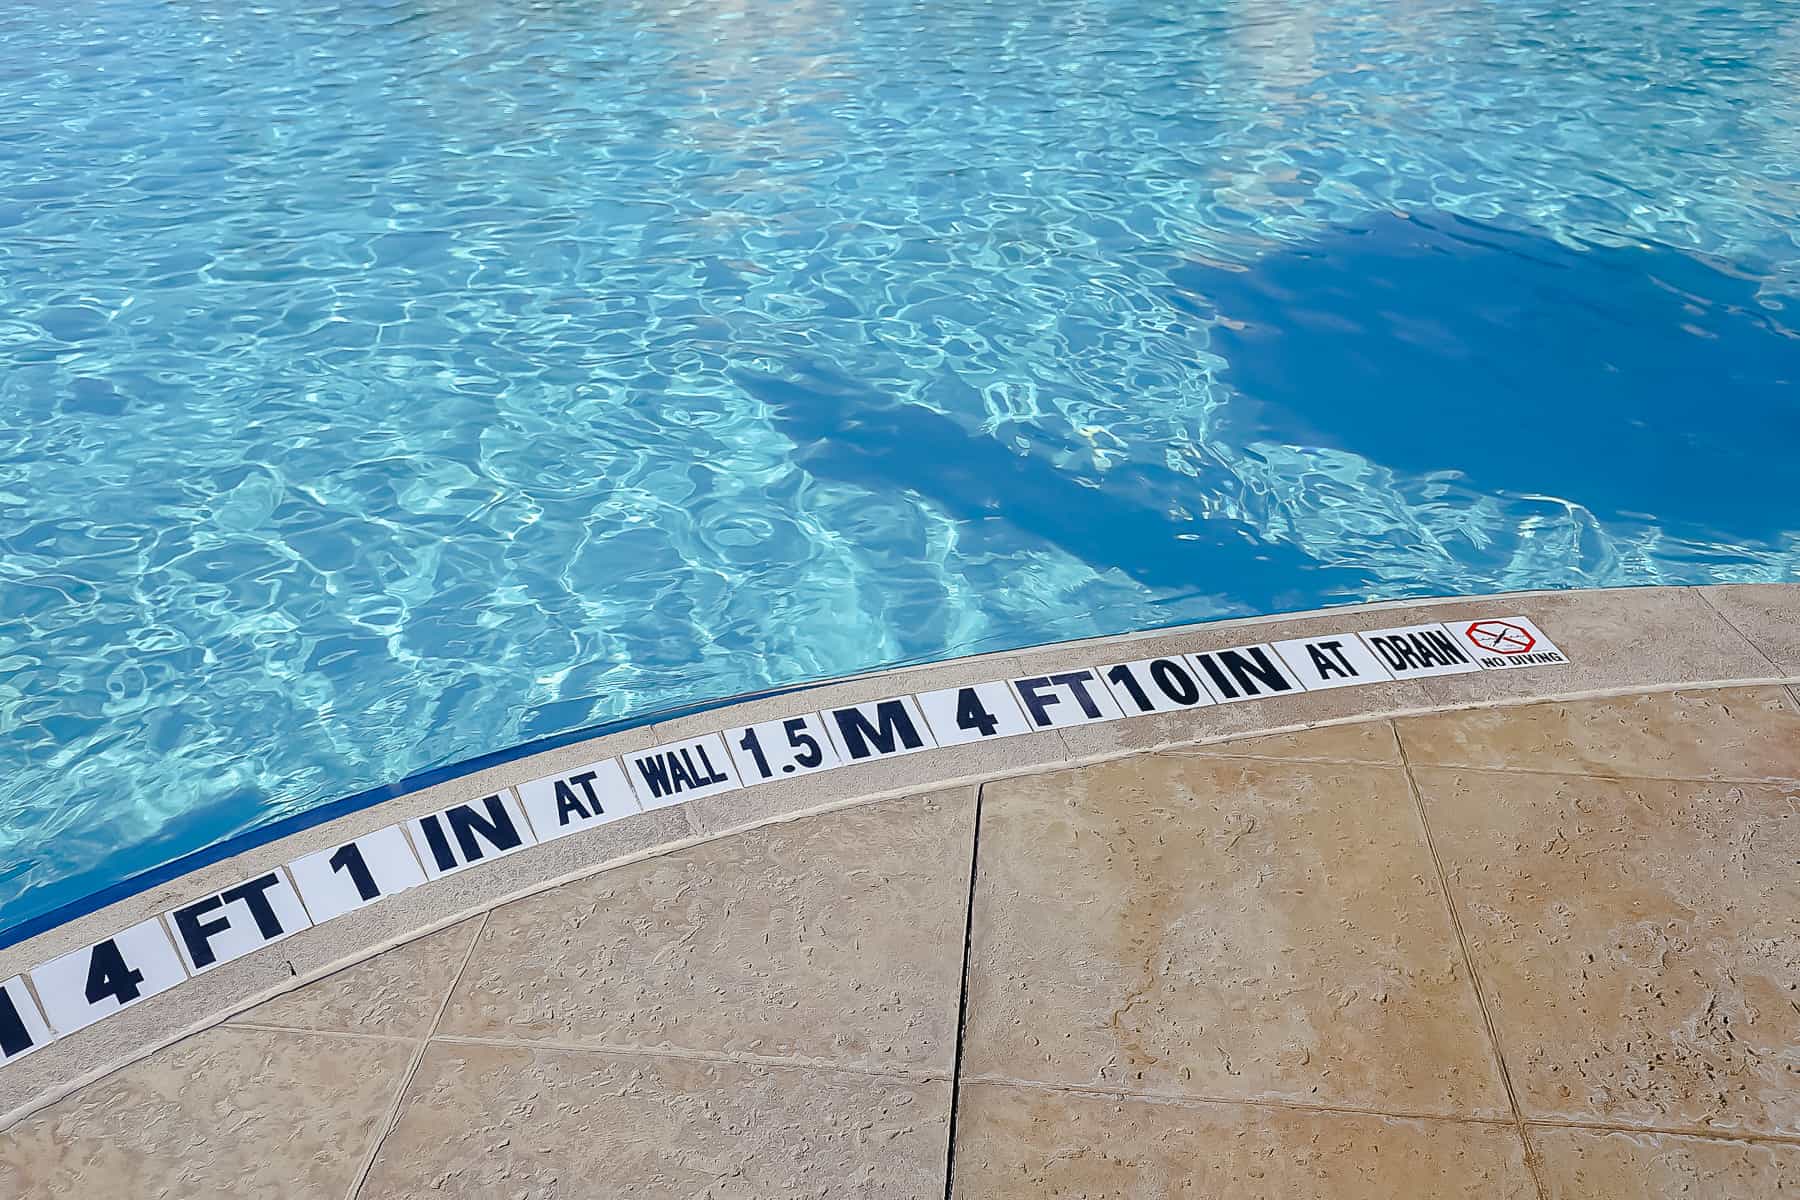 printed concrete shows the pool depth 